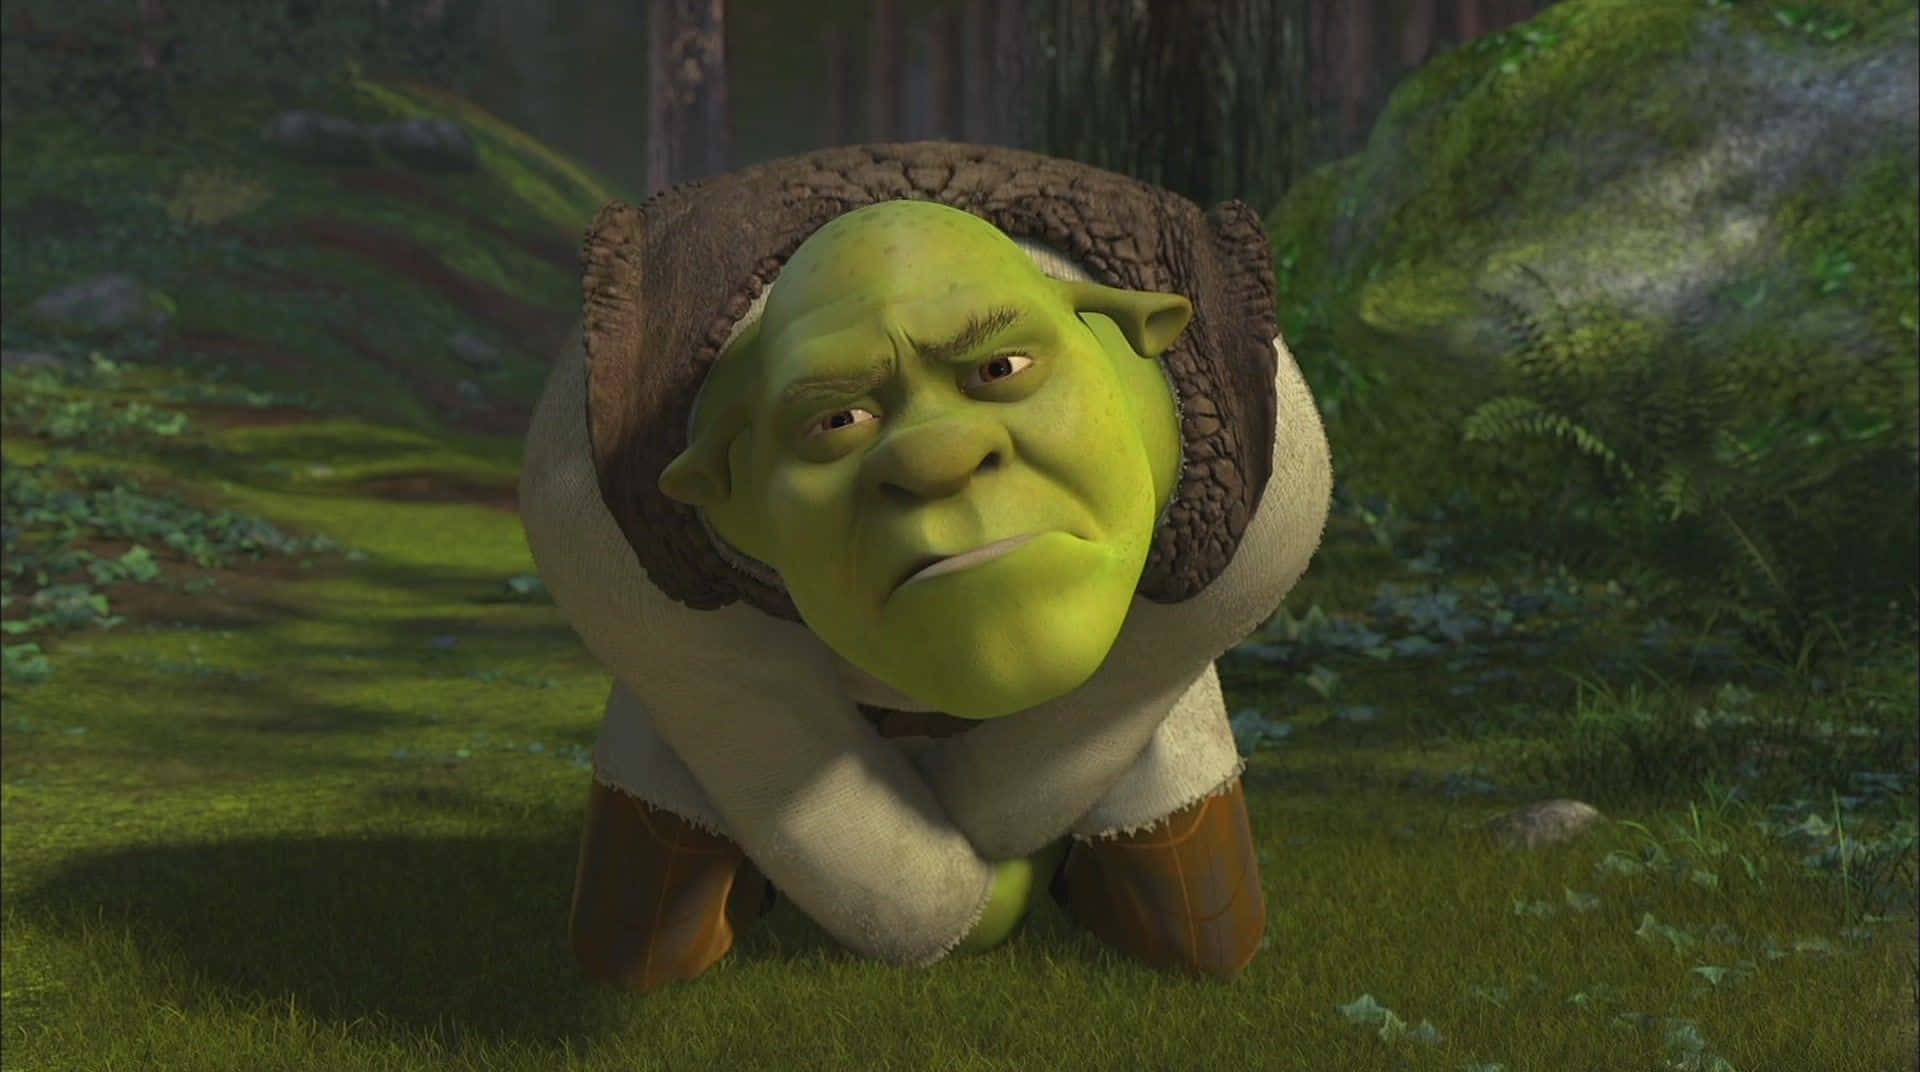 Shrek has a goofy grin that will make you laugh.